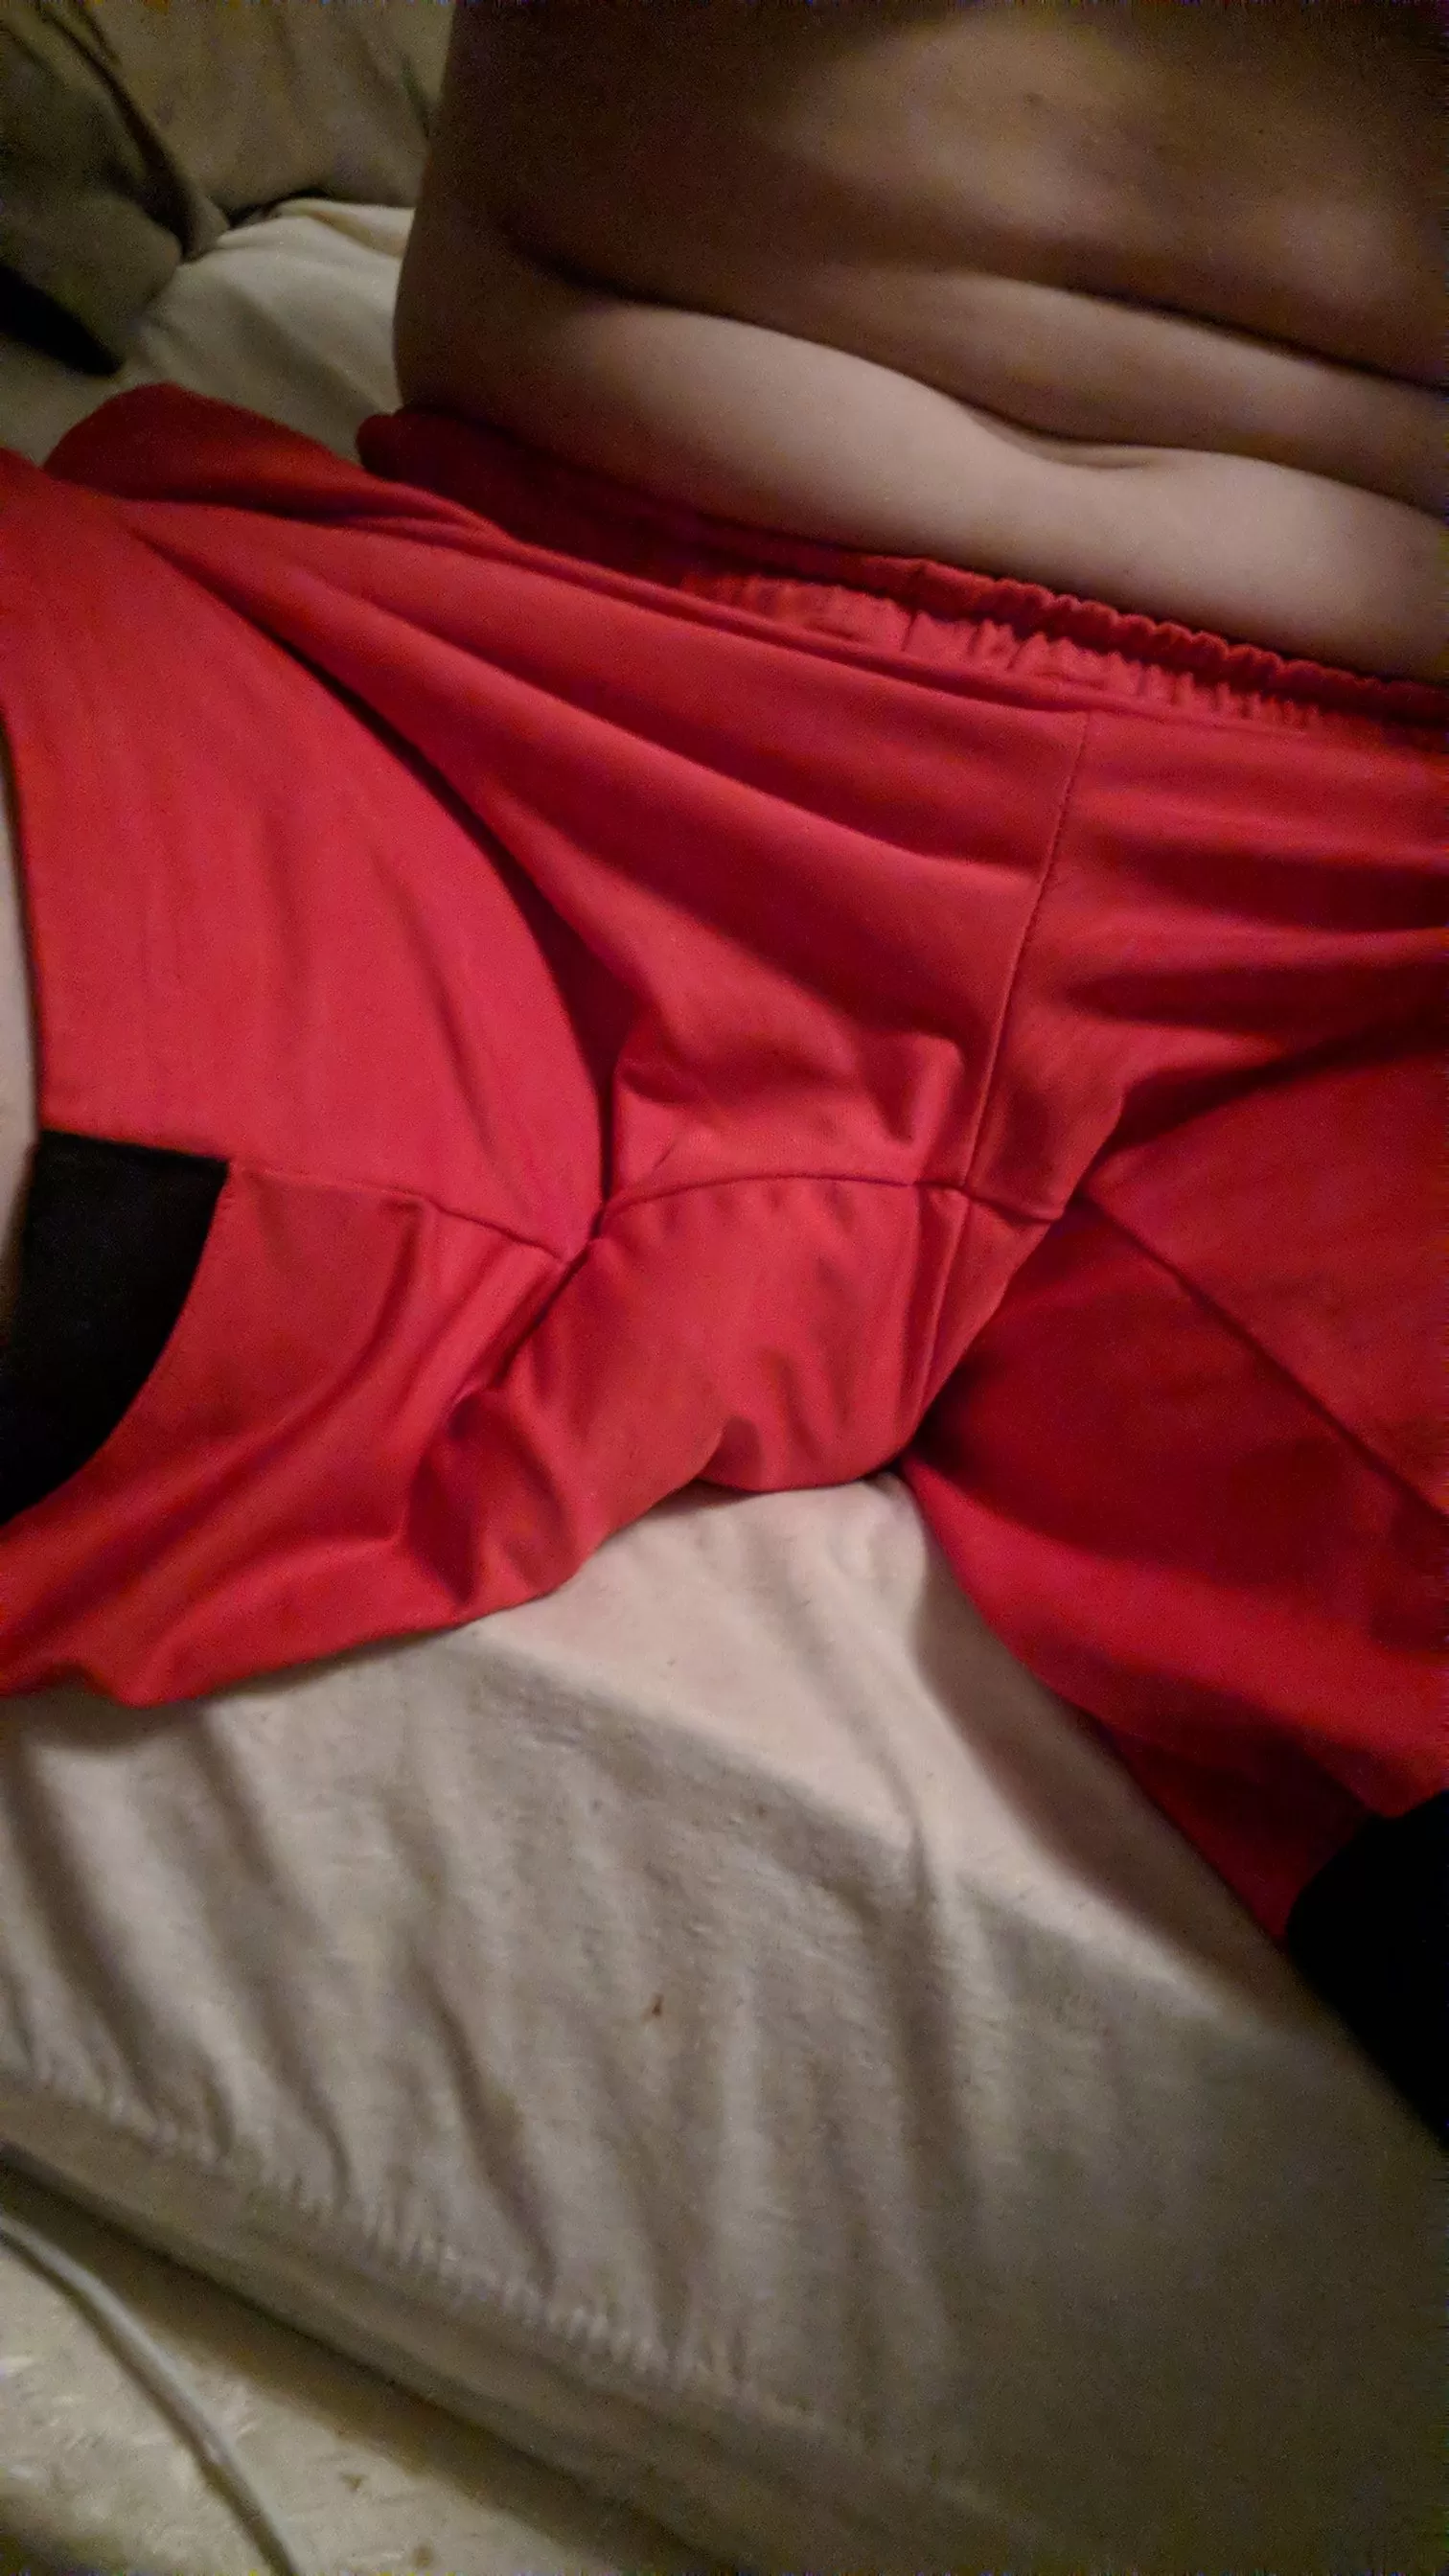 big dick gym shorts selfie sexy video pics